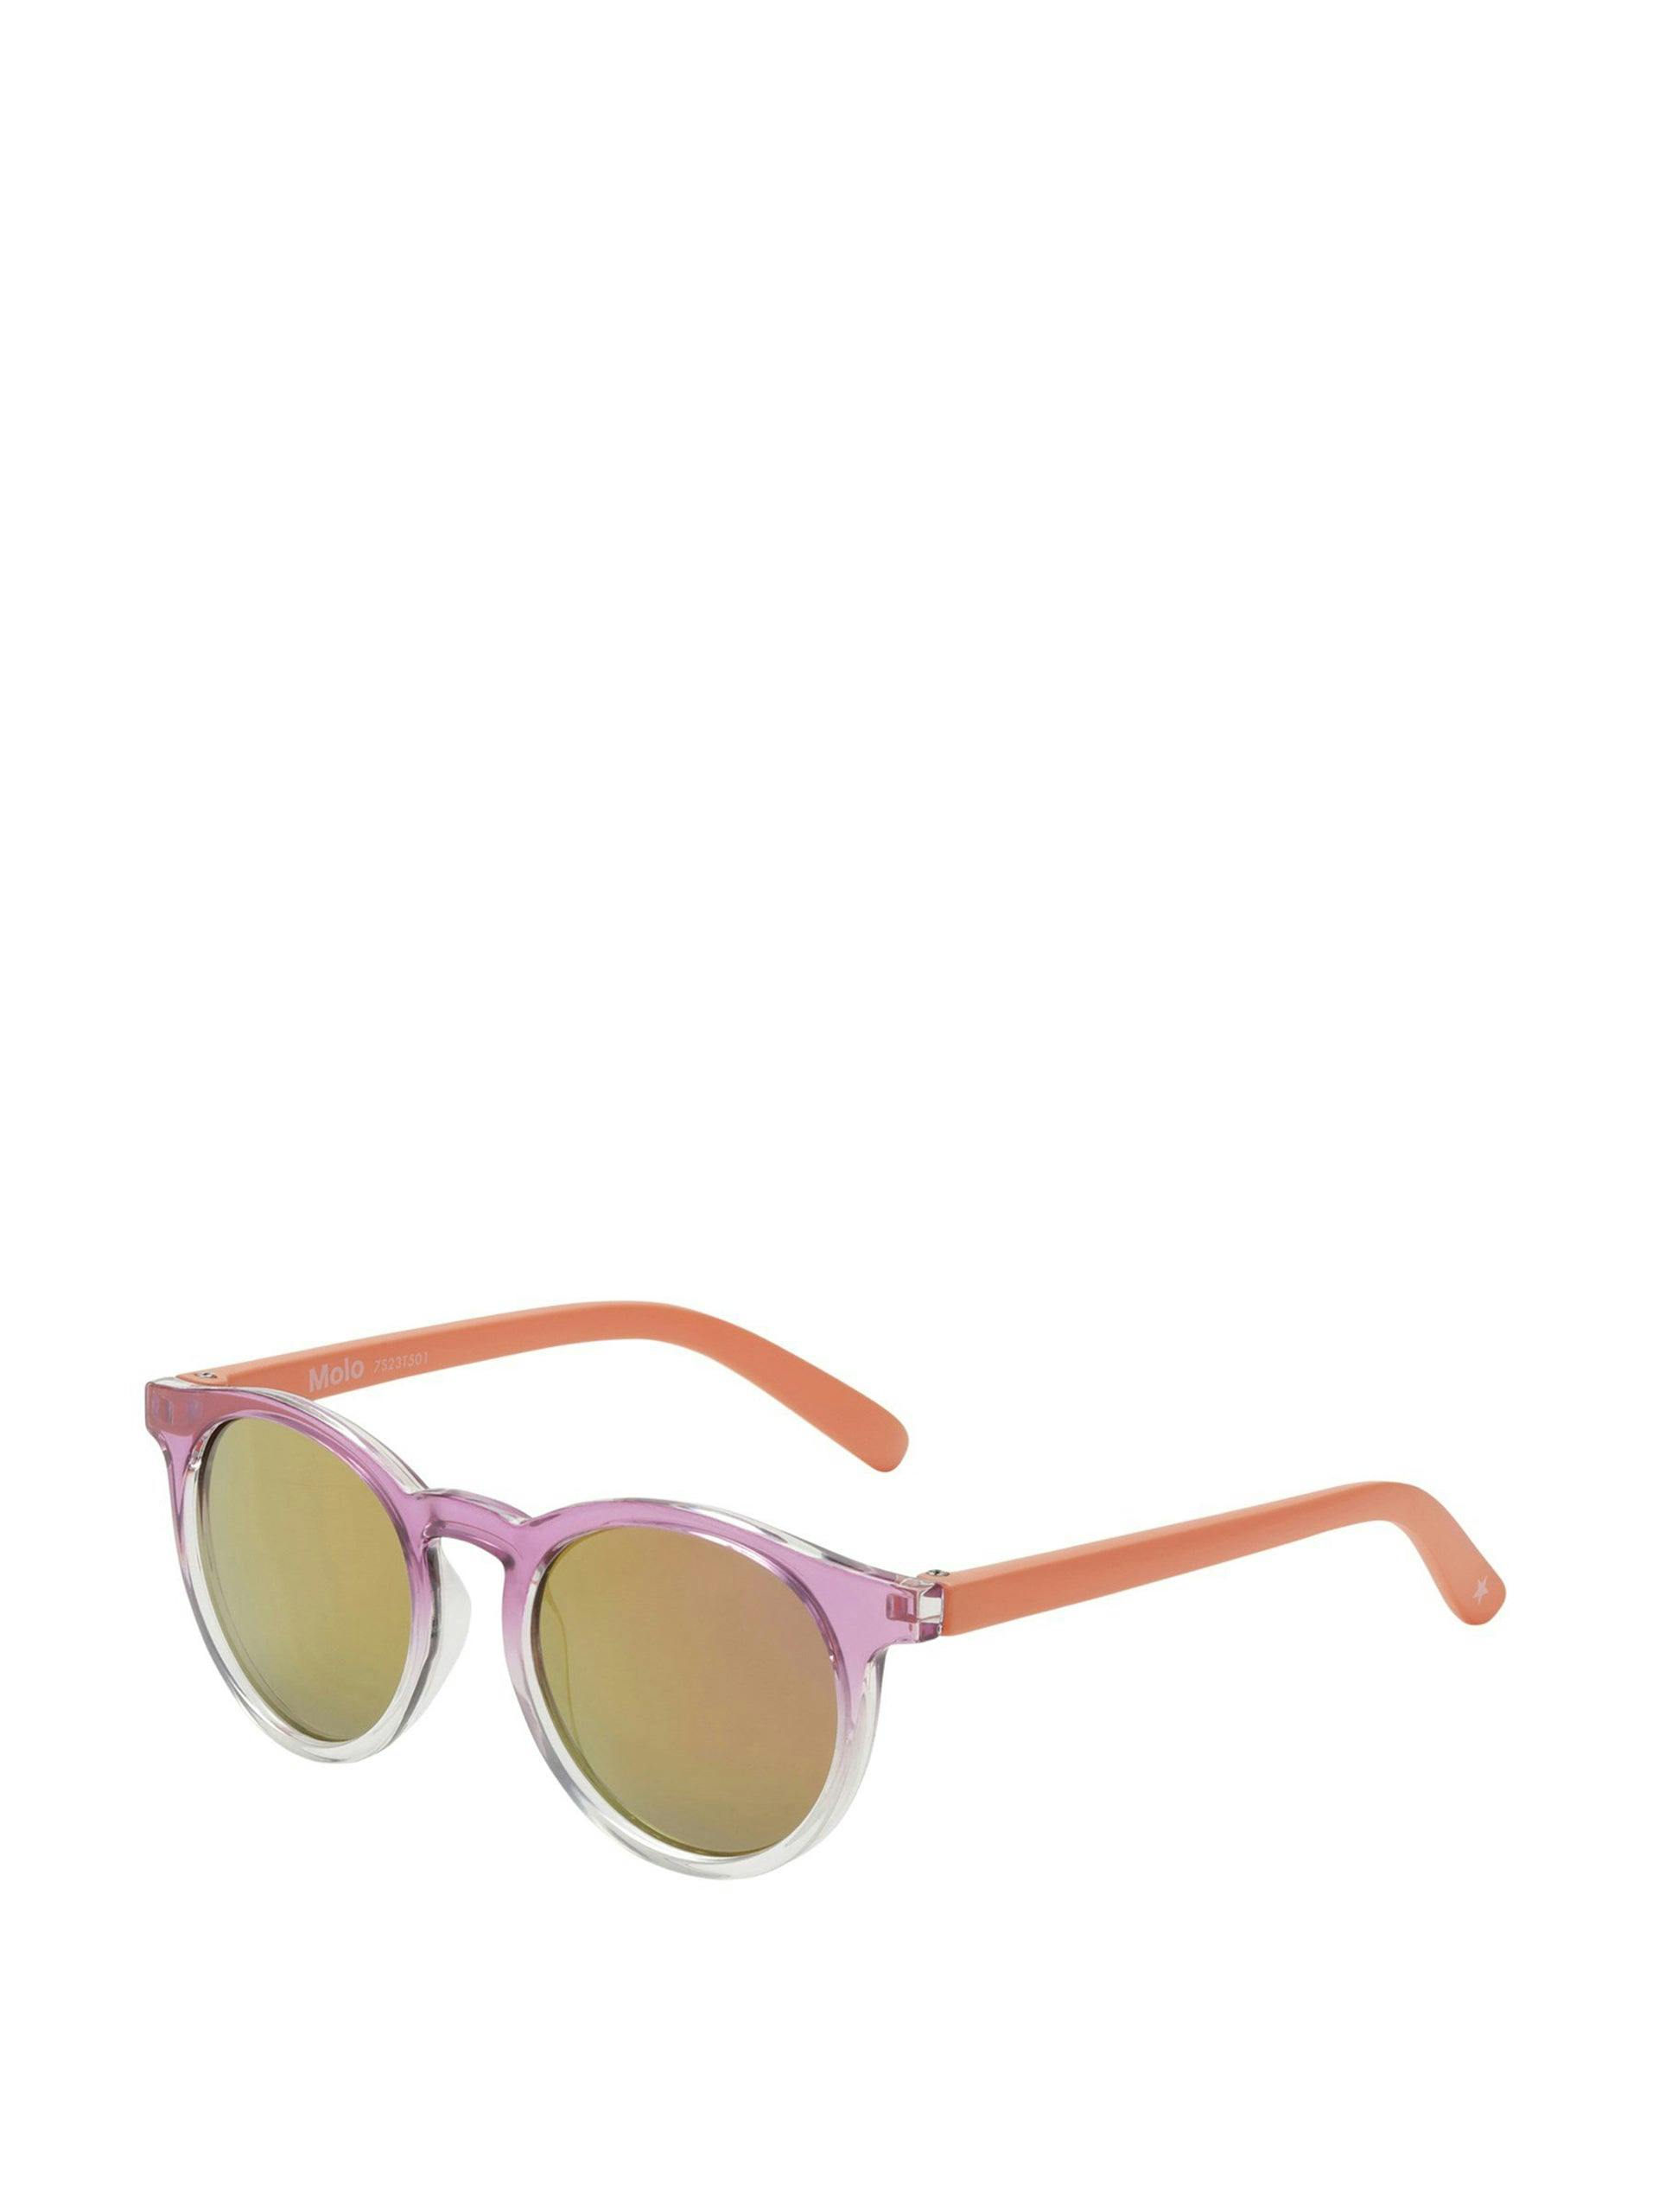 Lilac sunglasses